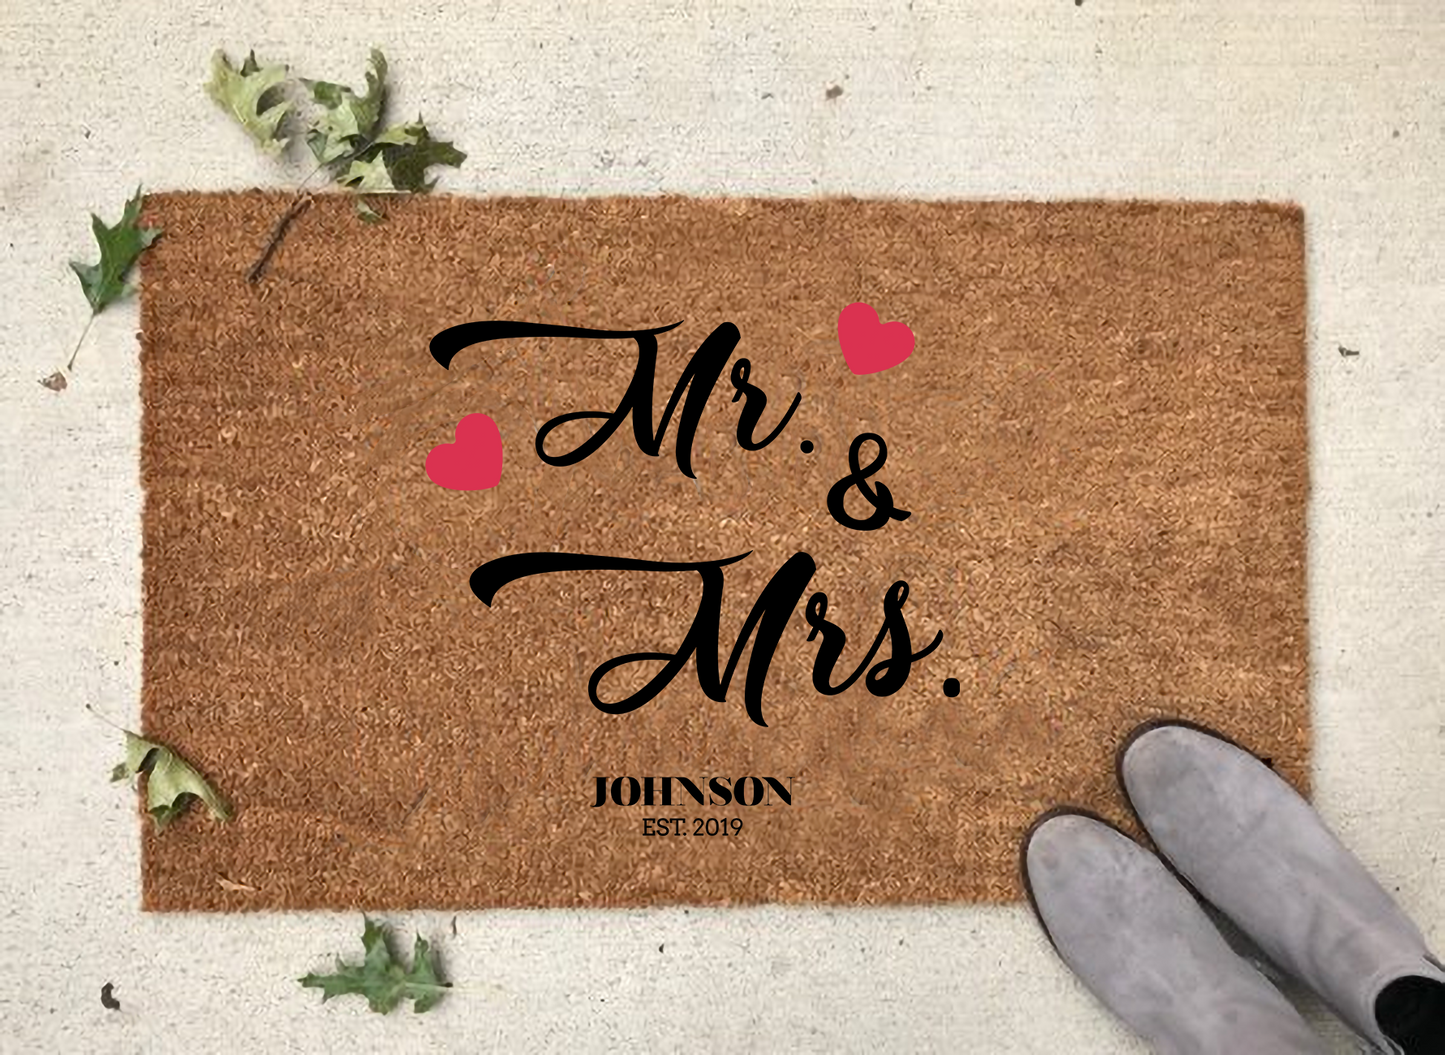 MR & MRS Personalized Doormat - USTAD HOME